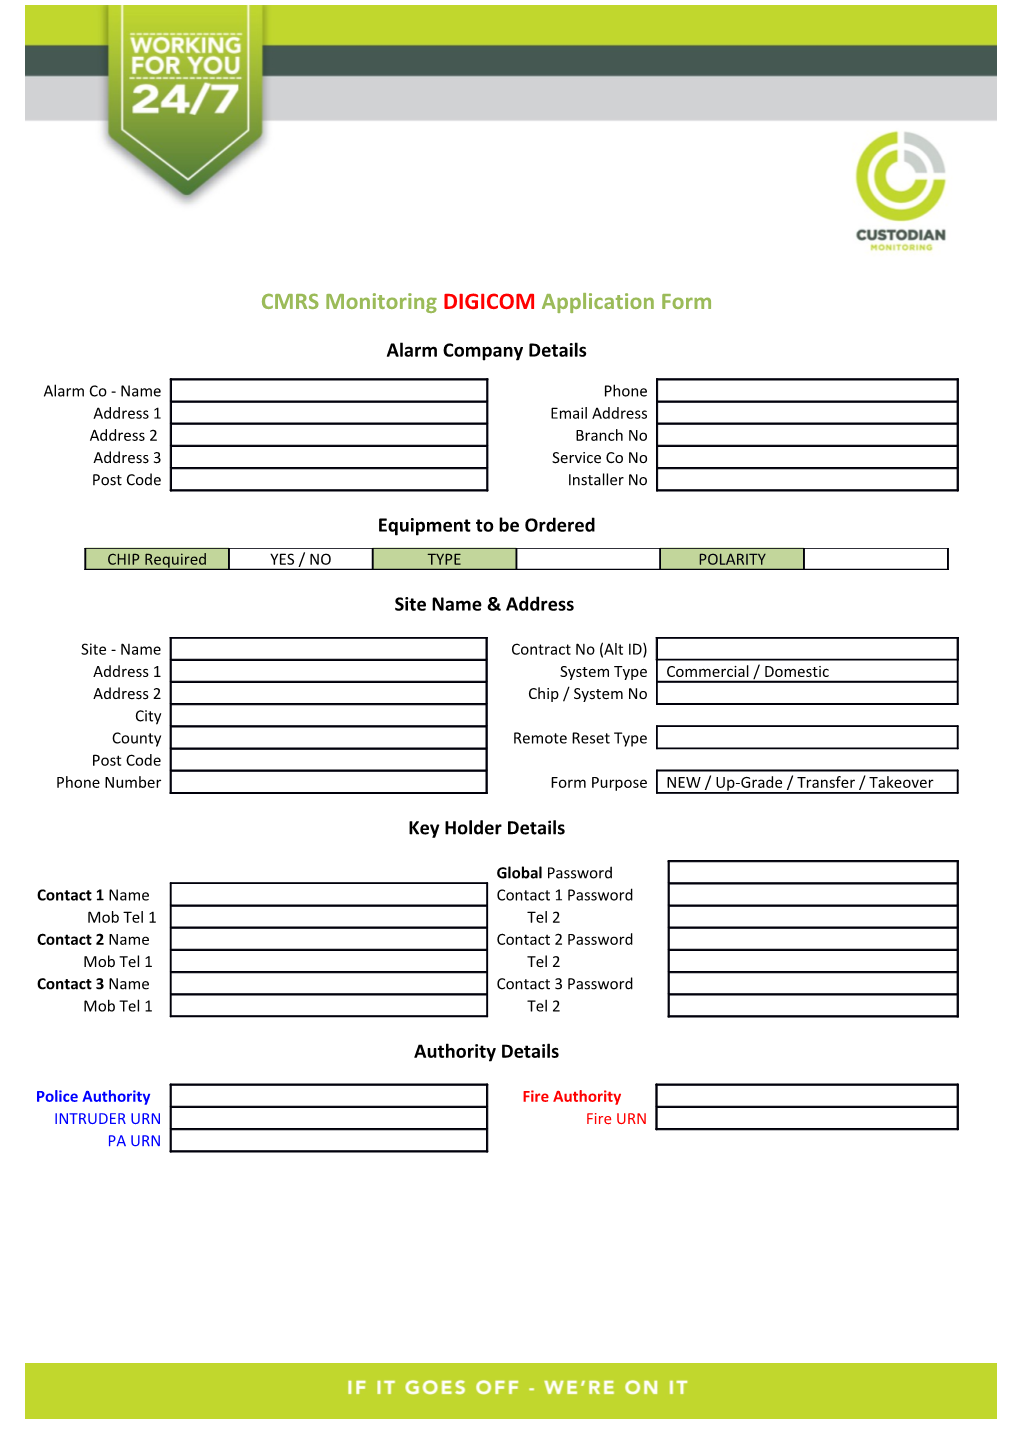 CMRS Monitoring Digicomapplication Form